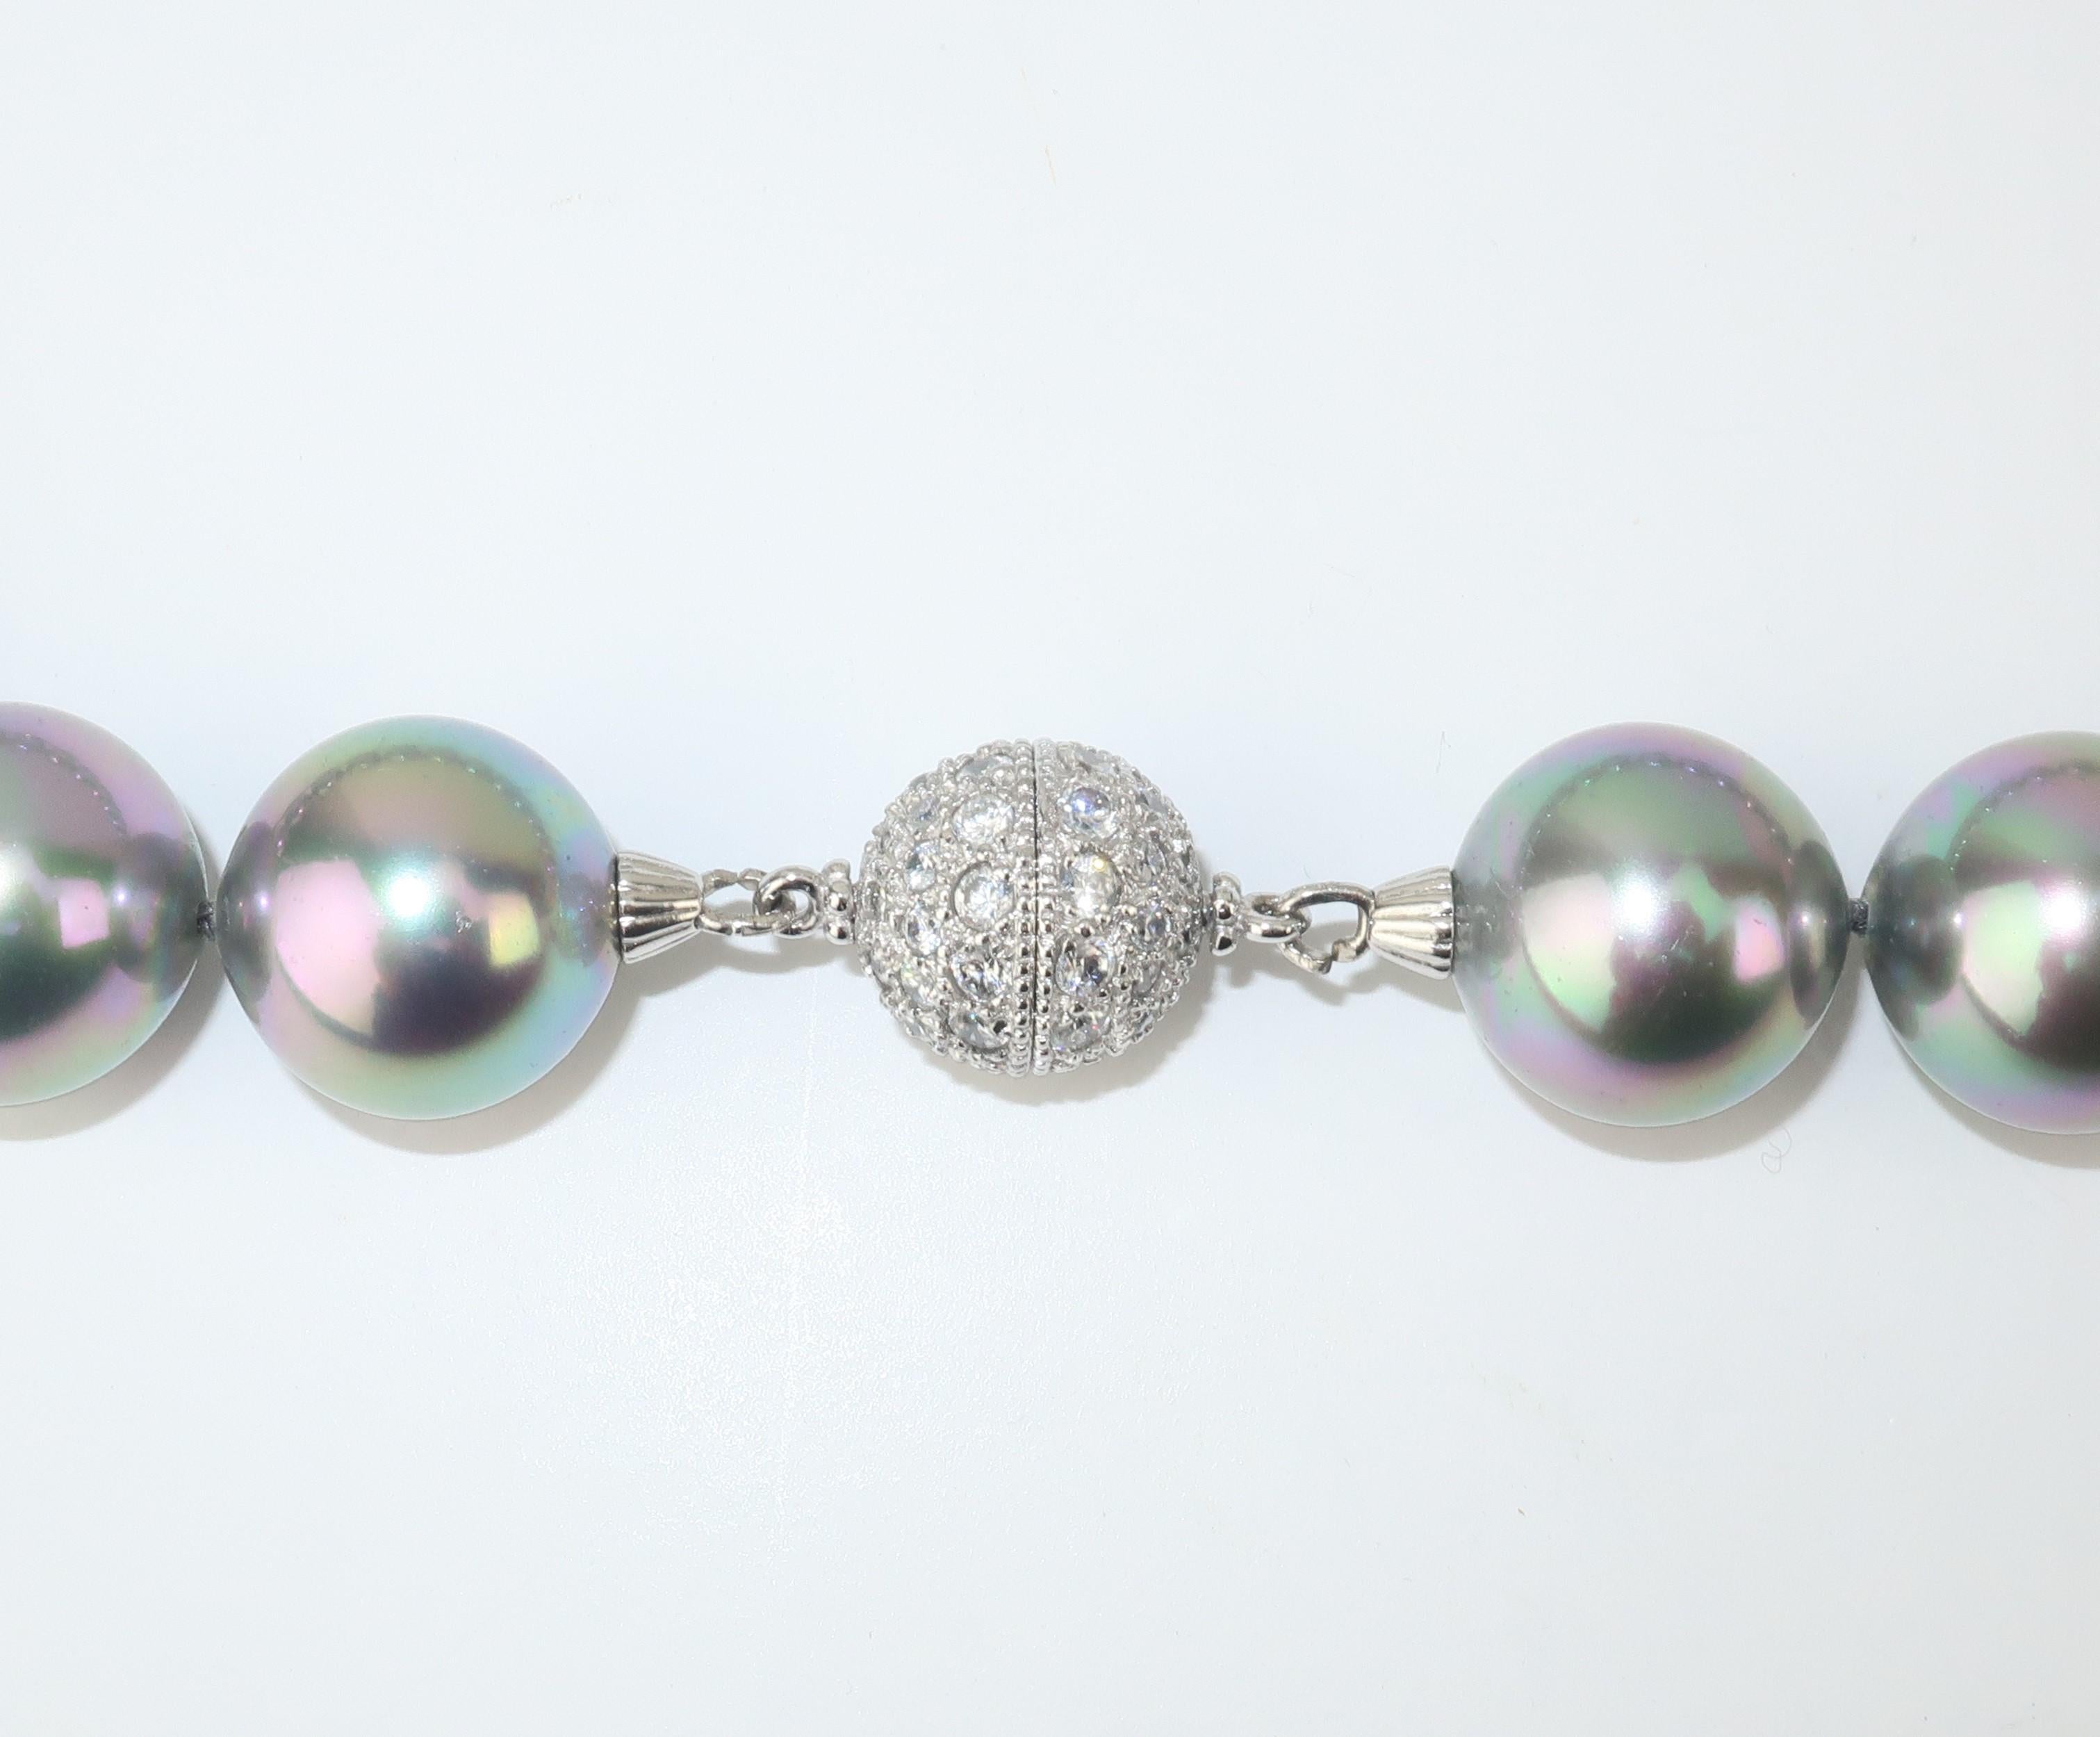 Faux Gray Pearl Choker Necklace With Rhinestone Closure In Good Condition For Sale In Atlanta, GA